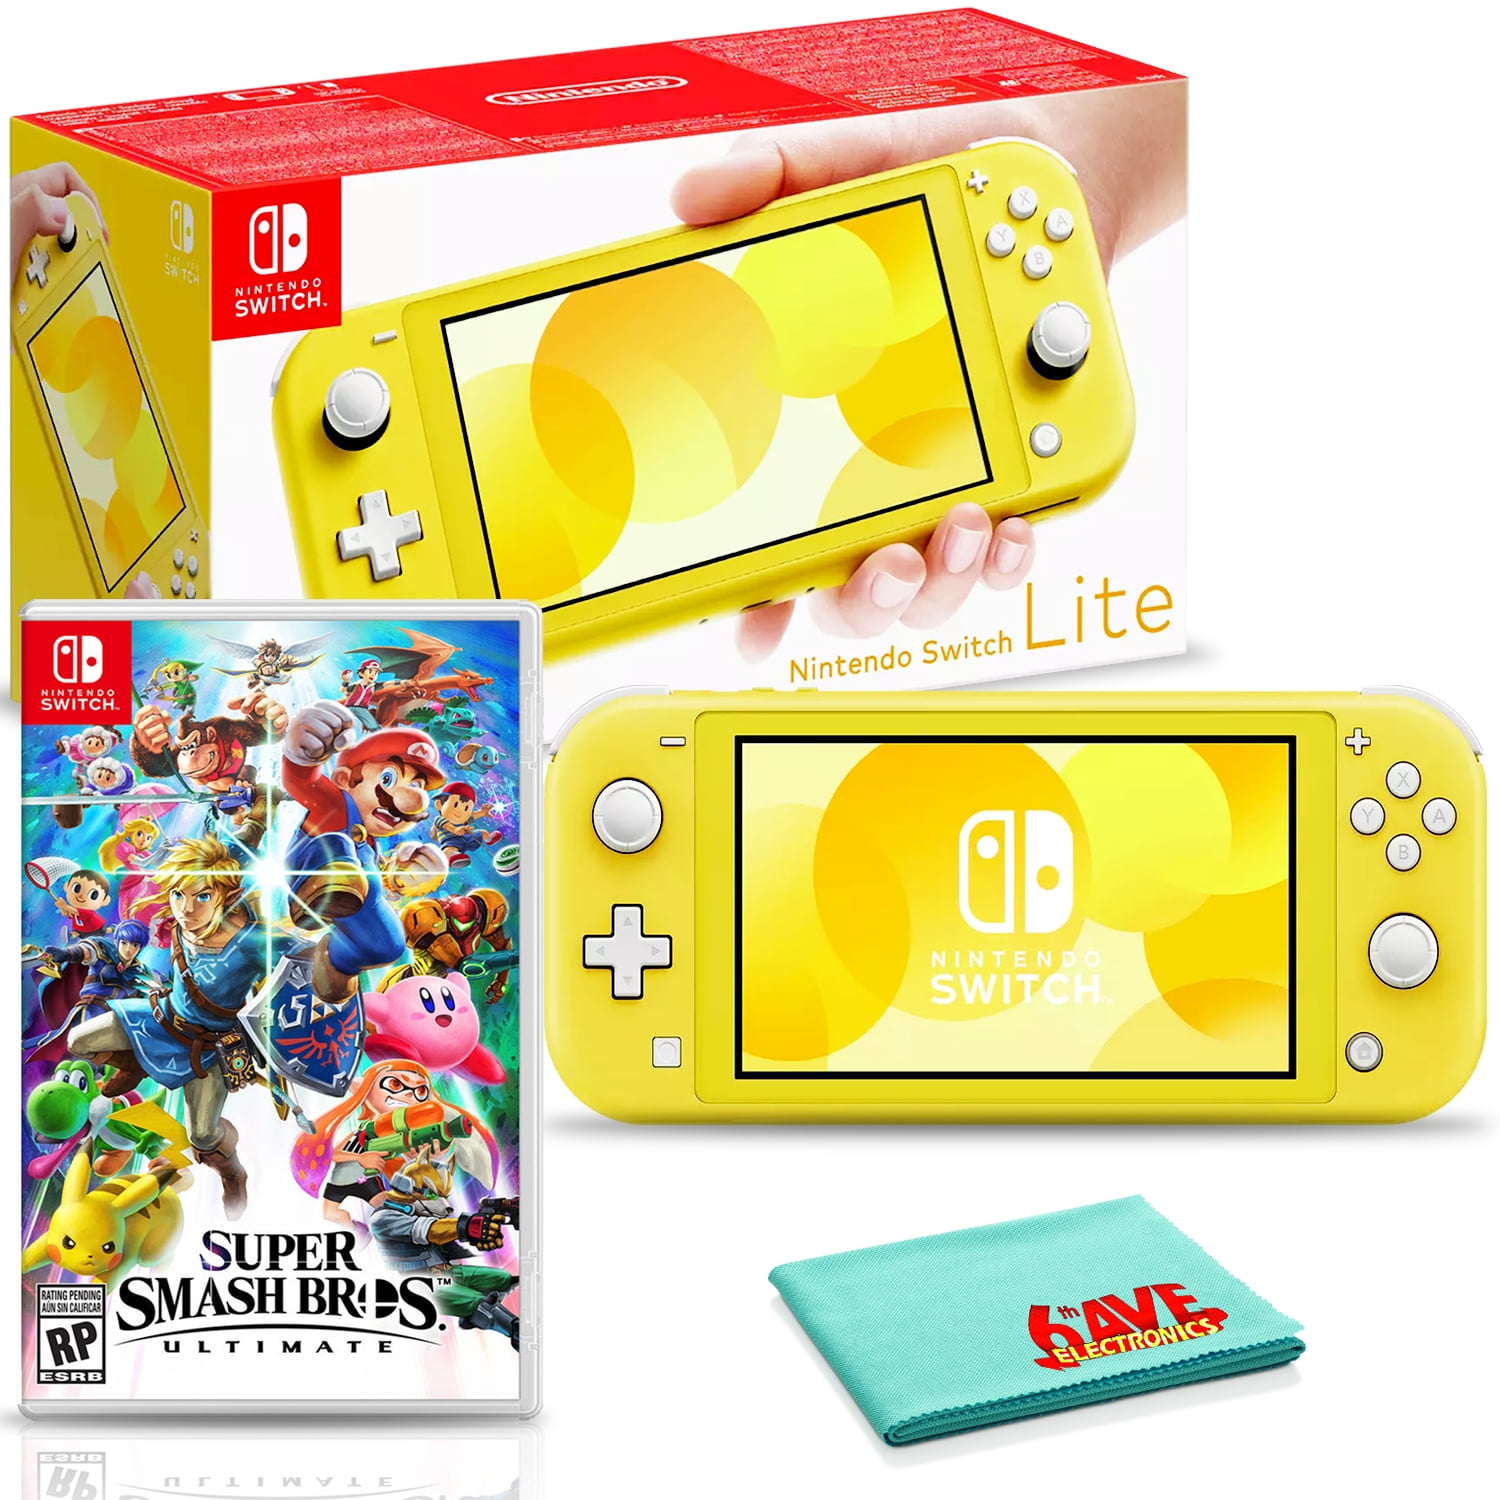 Nintendo Switch Lite (Yellow) Bundle with Super Smash Bros. Ultimate